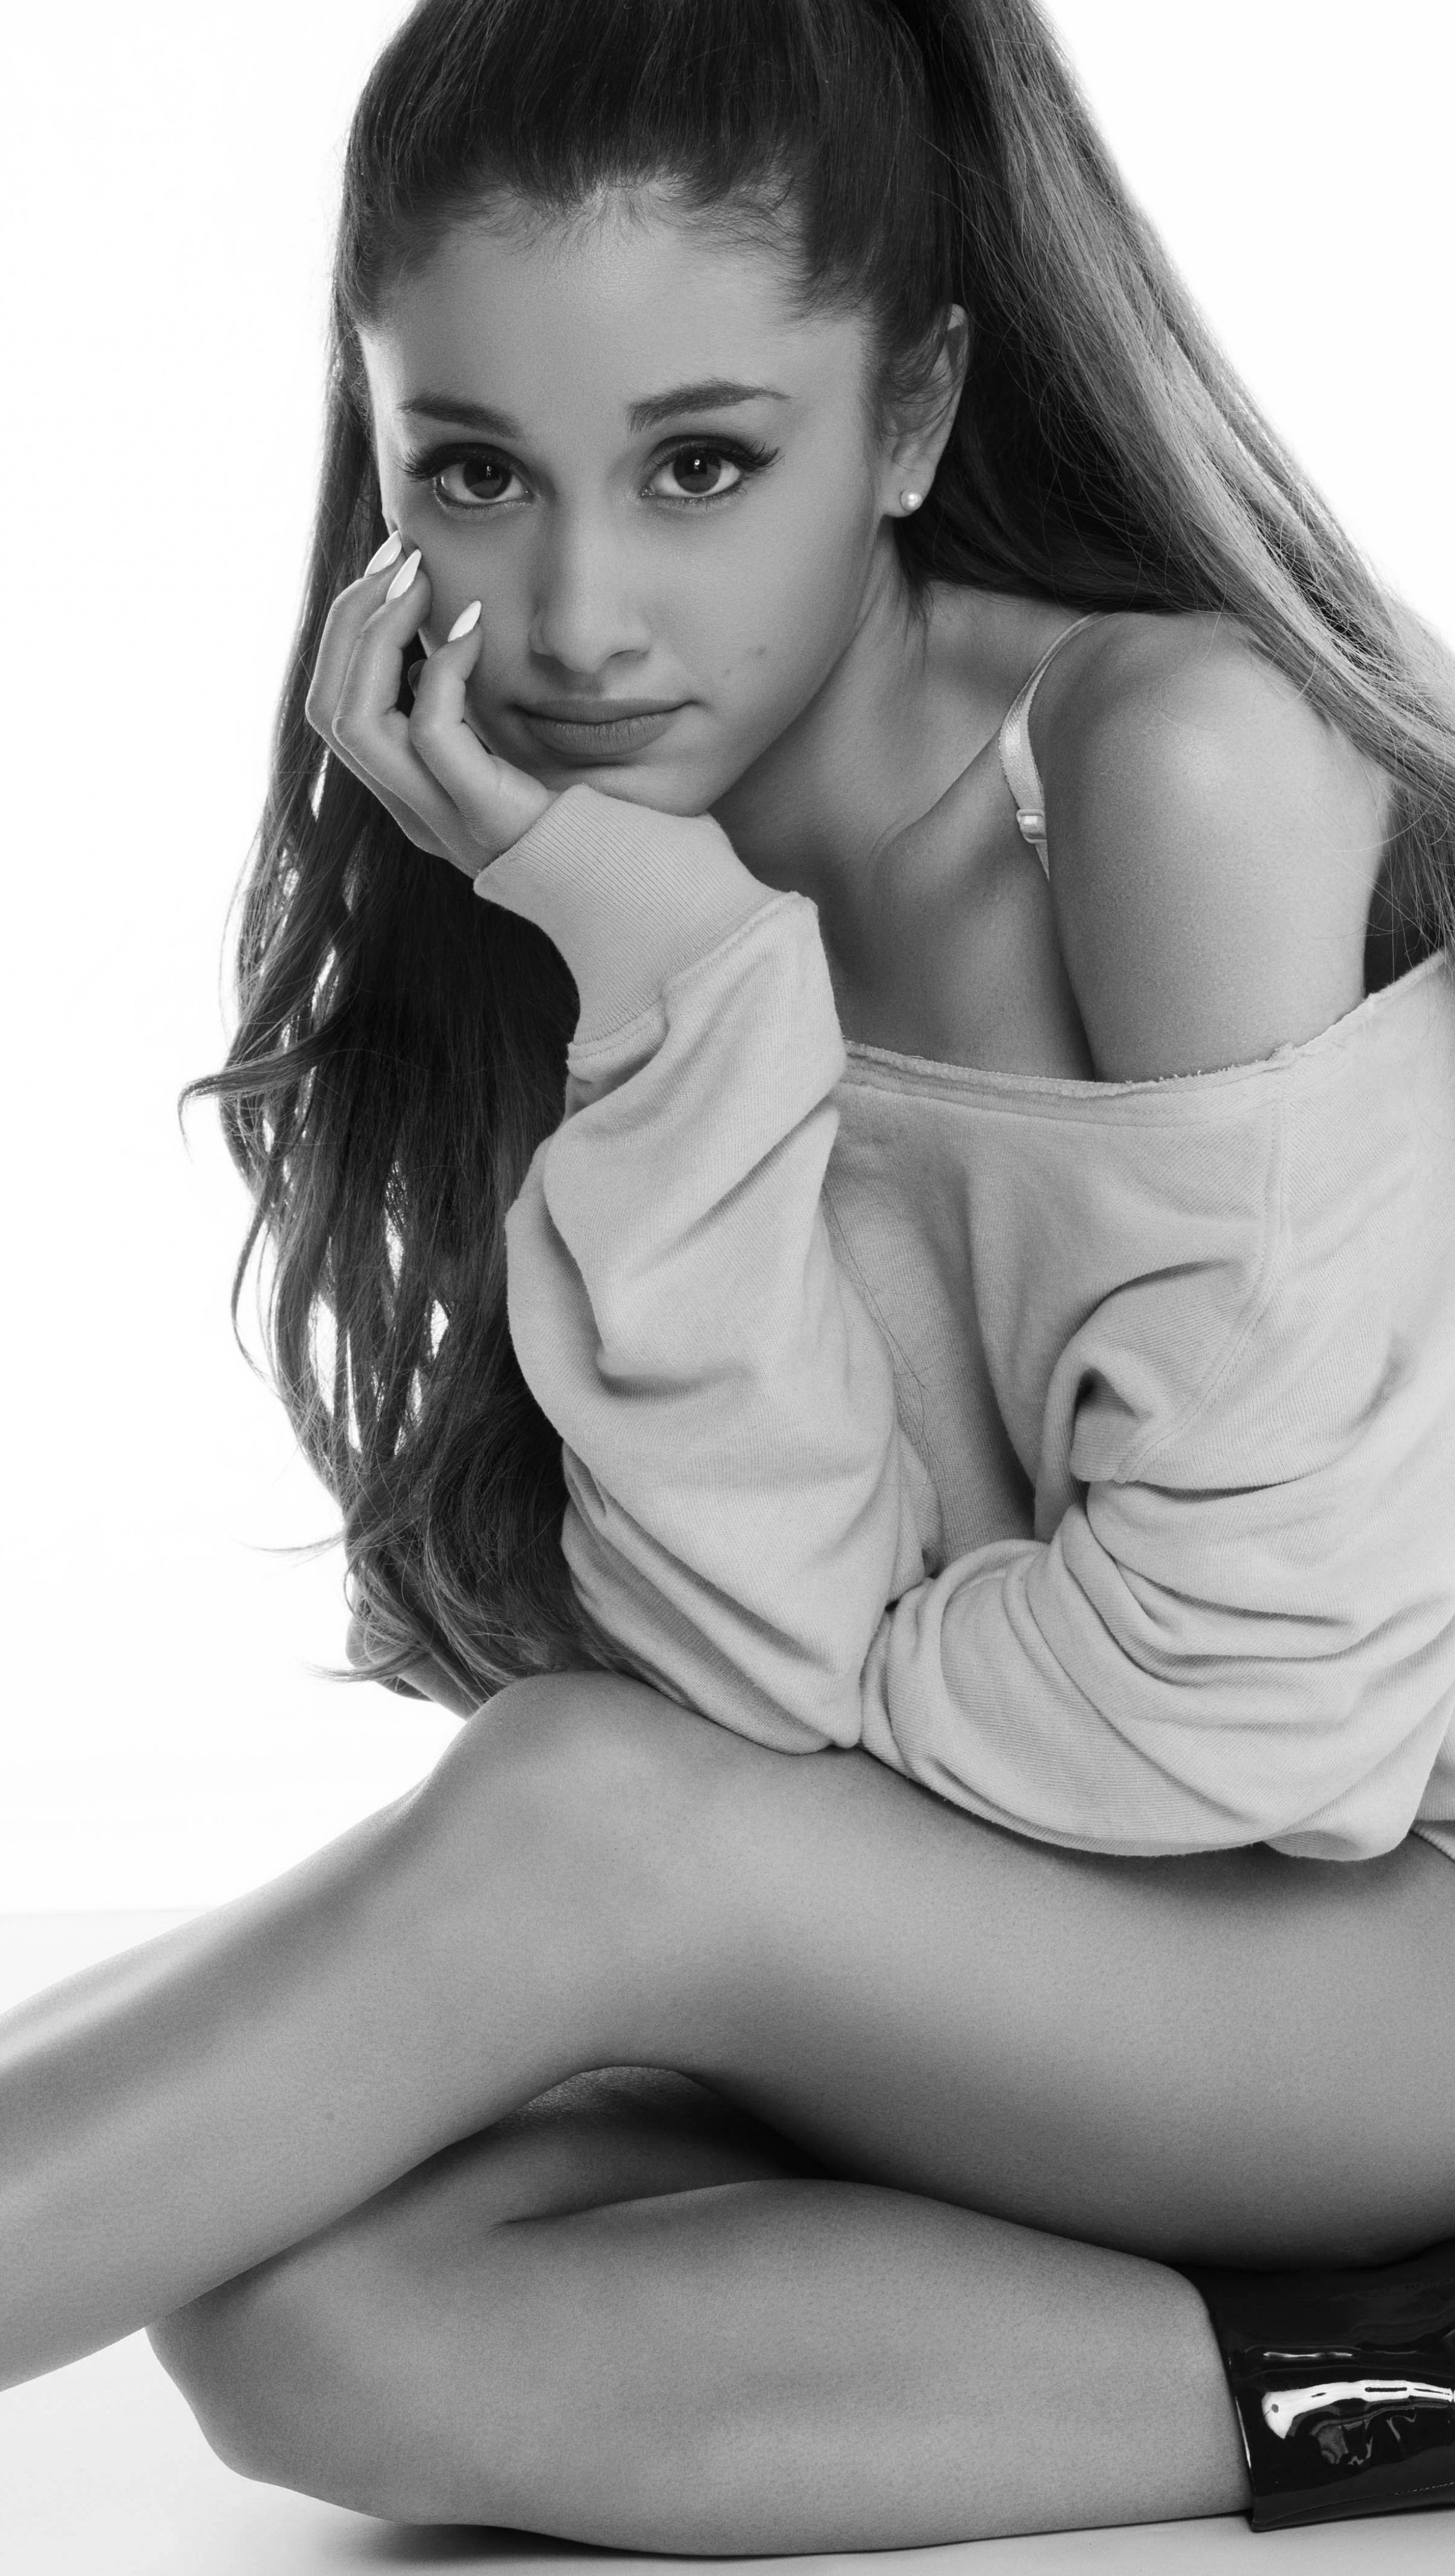 Wallpaper Ariana Grande in black and white Vertical